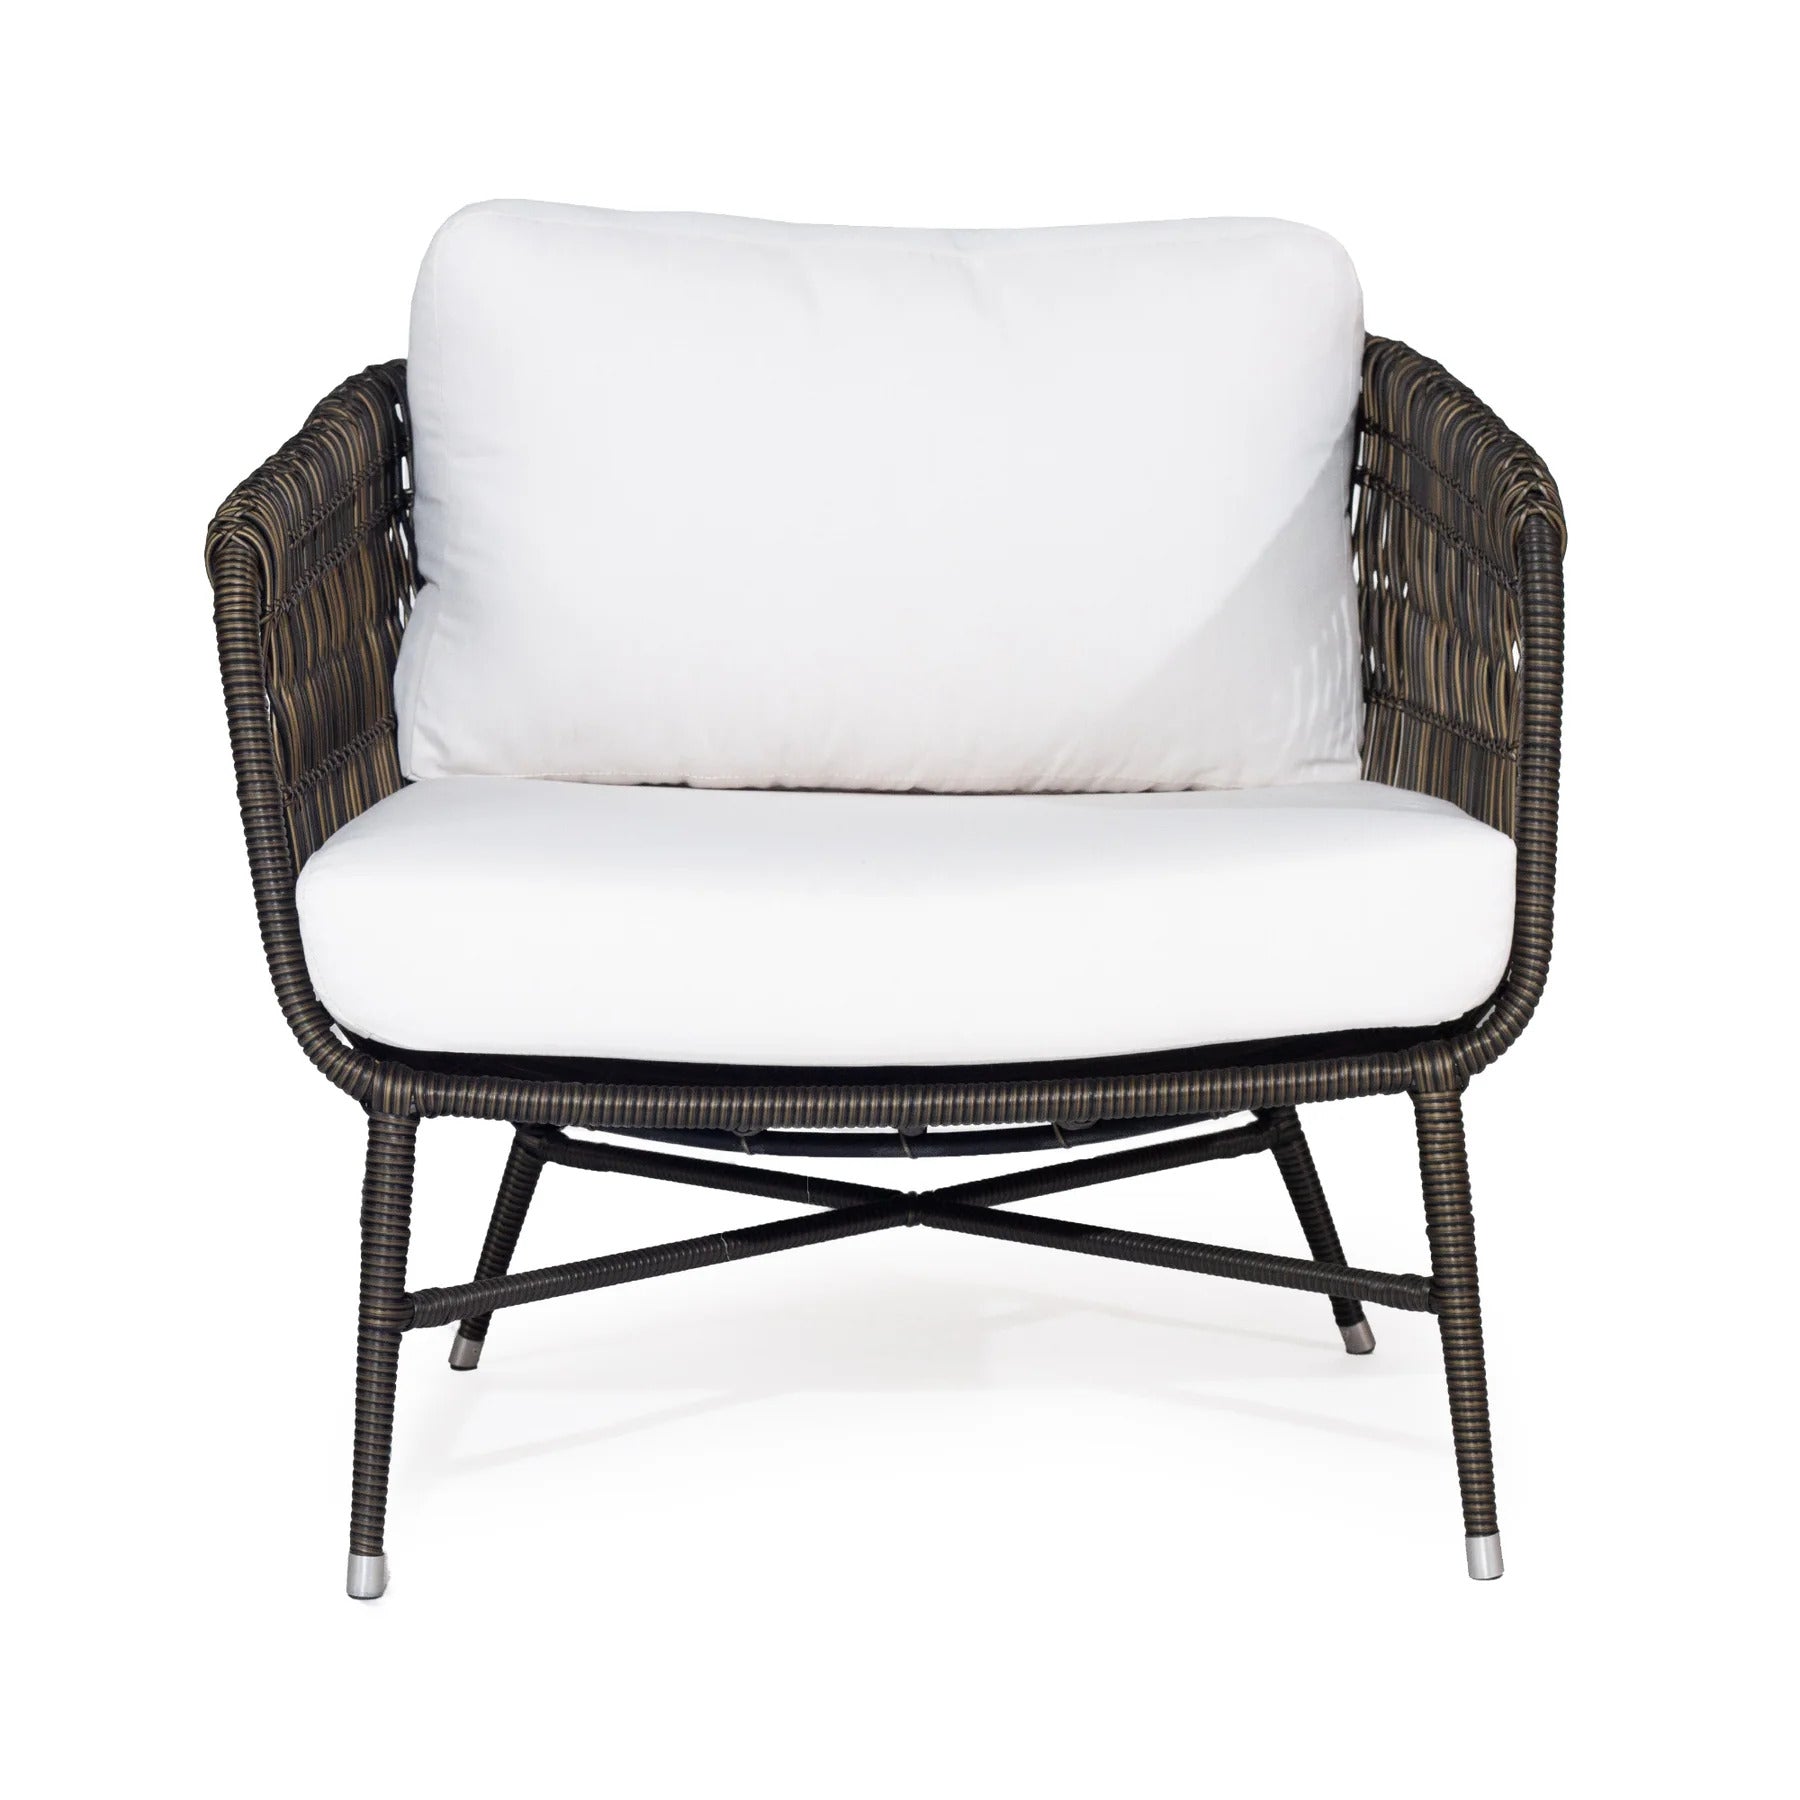 Tobin Outdoor Occasional Chair (Black/Espresso).